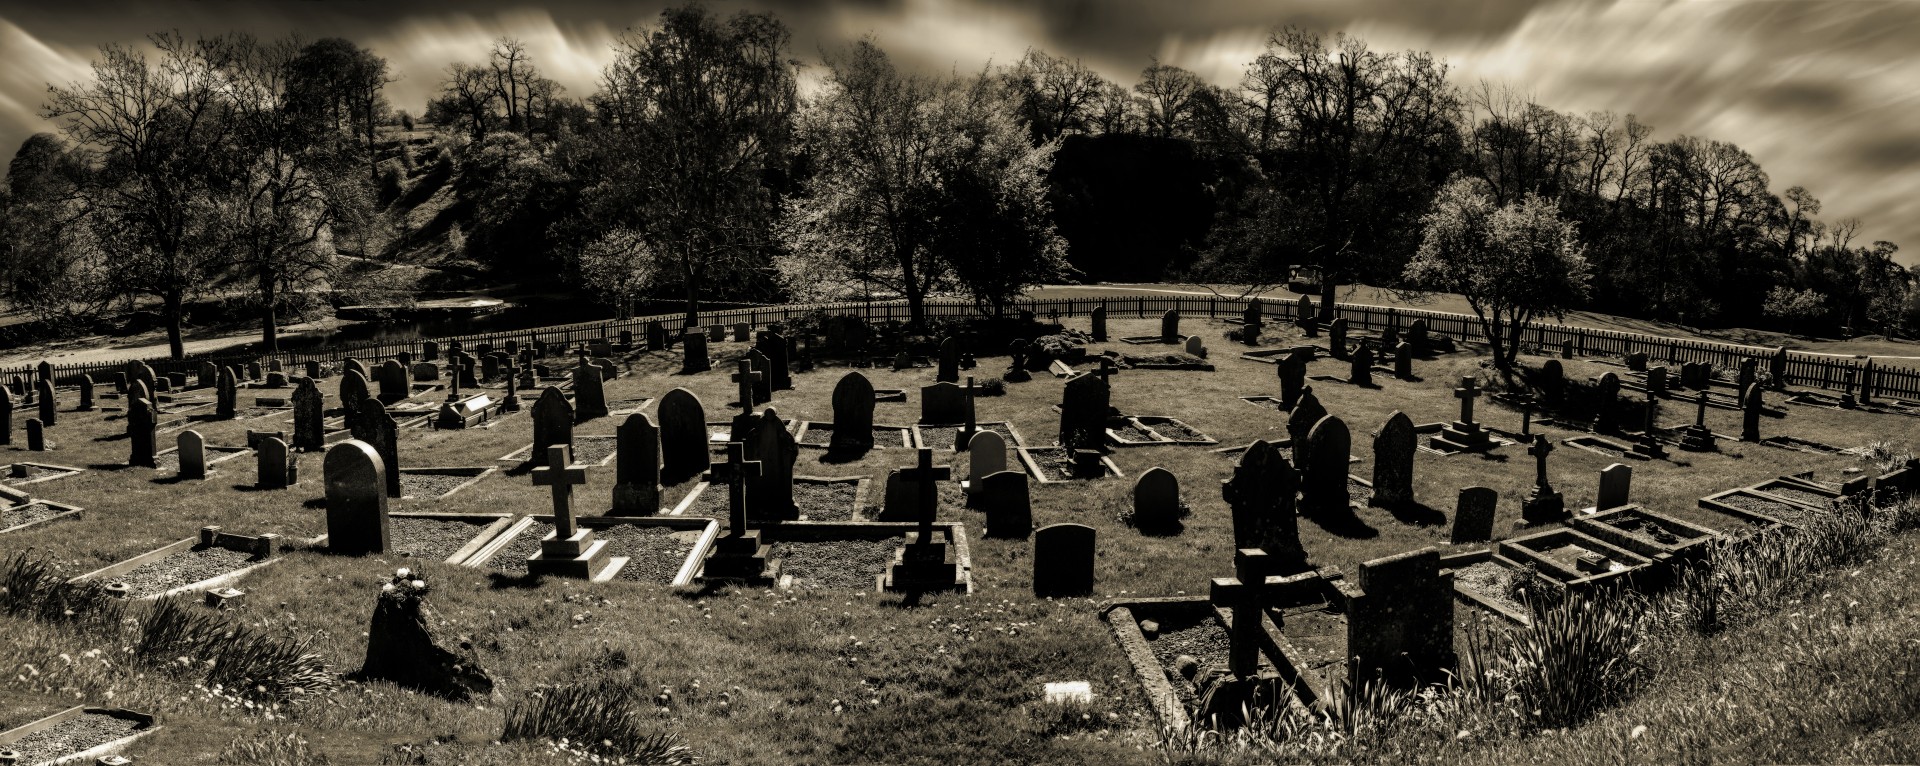 cemetery graveyard burial free photo